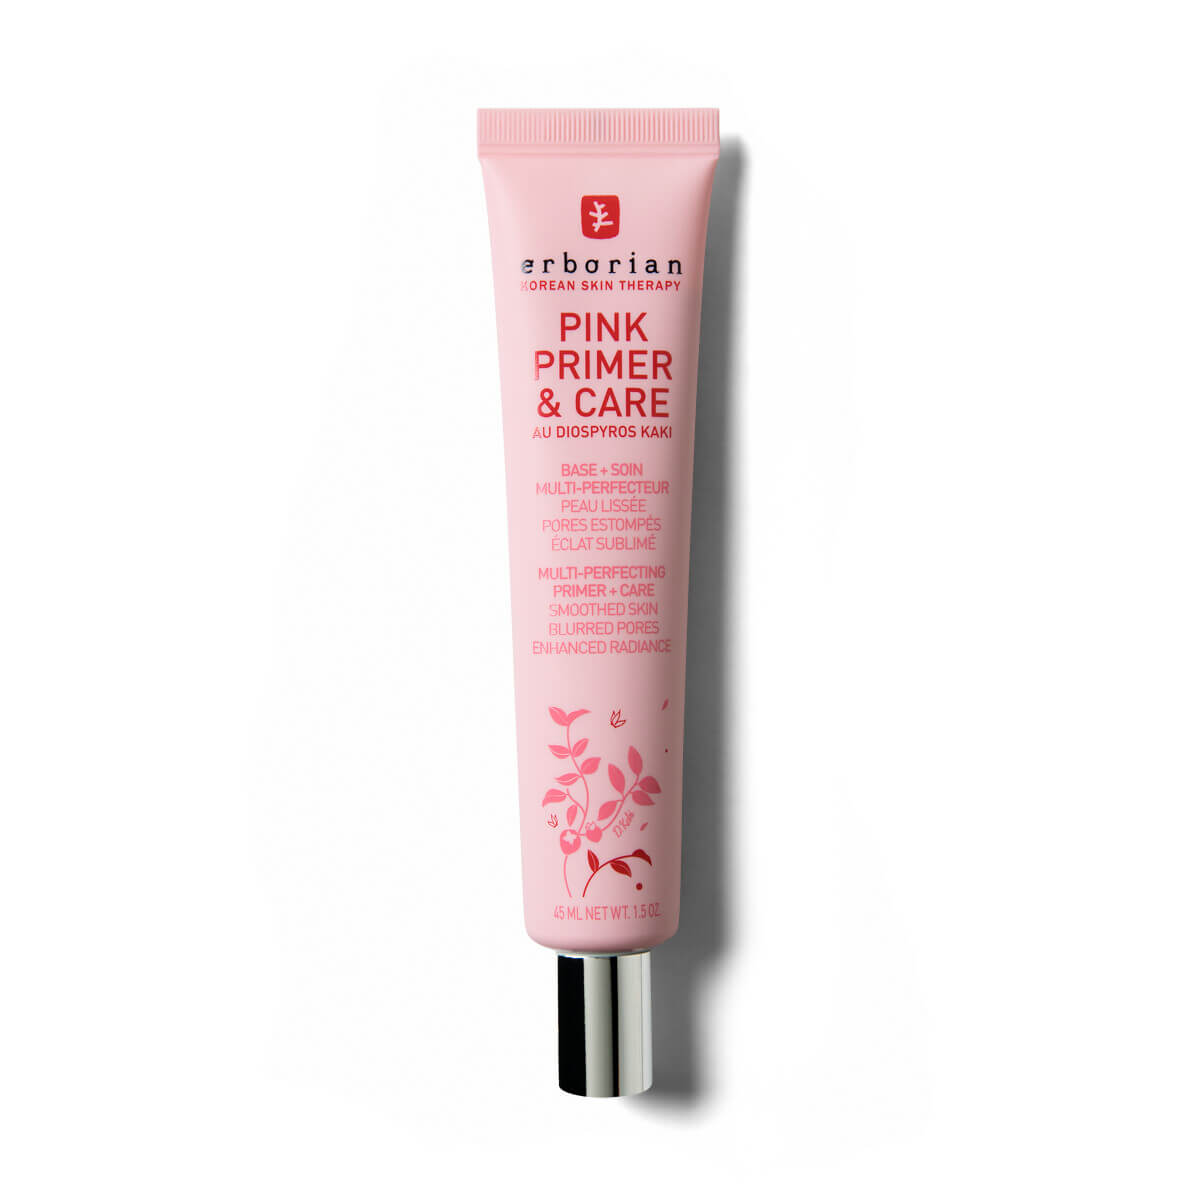 Zobrazit detail výrobku Erborian Podkladová báze Pink Primer & Care (Multi Perfecting Primer + Care) 45 ml